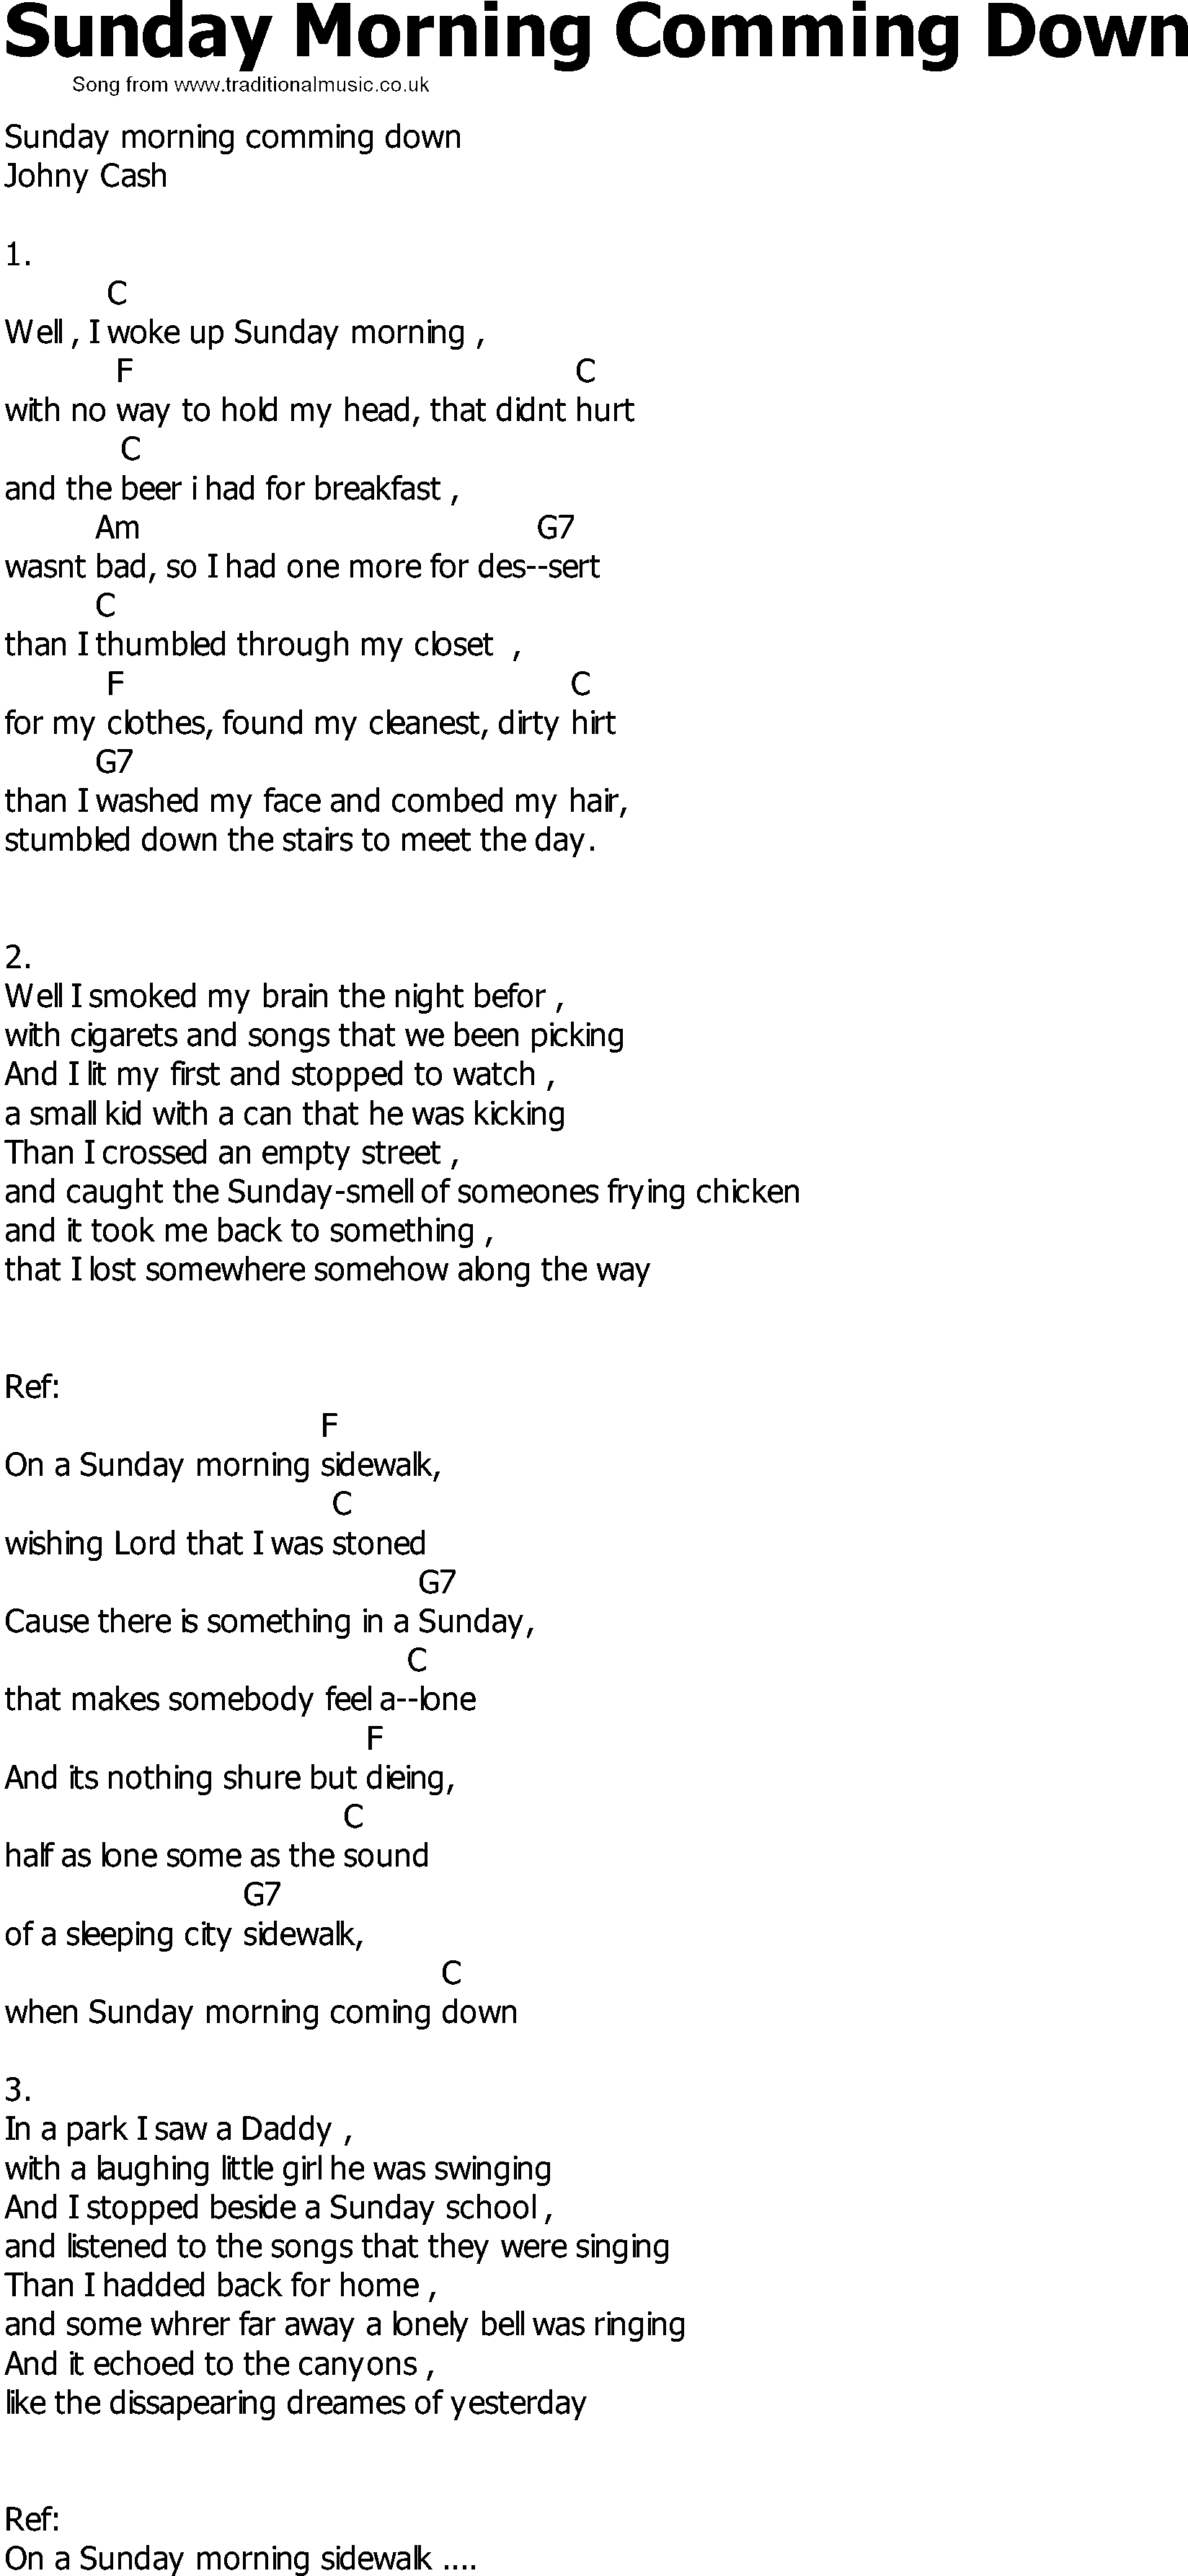 Sunday Morning Chords Old Country Song Lyrics With Chords Sunday Morning Comming Down